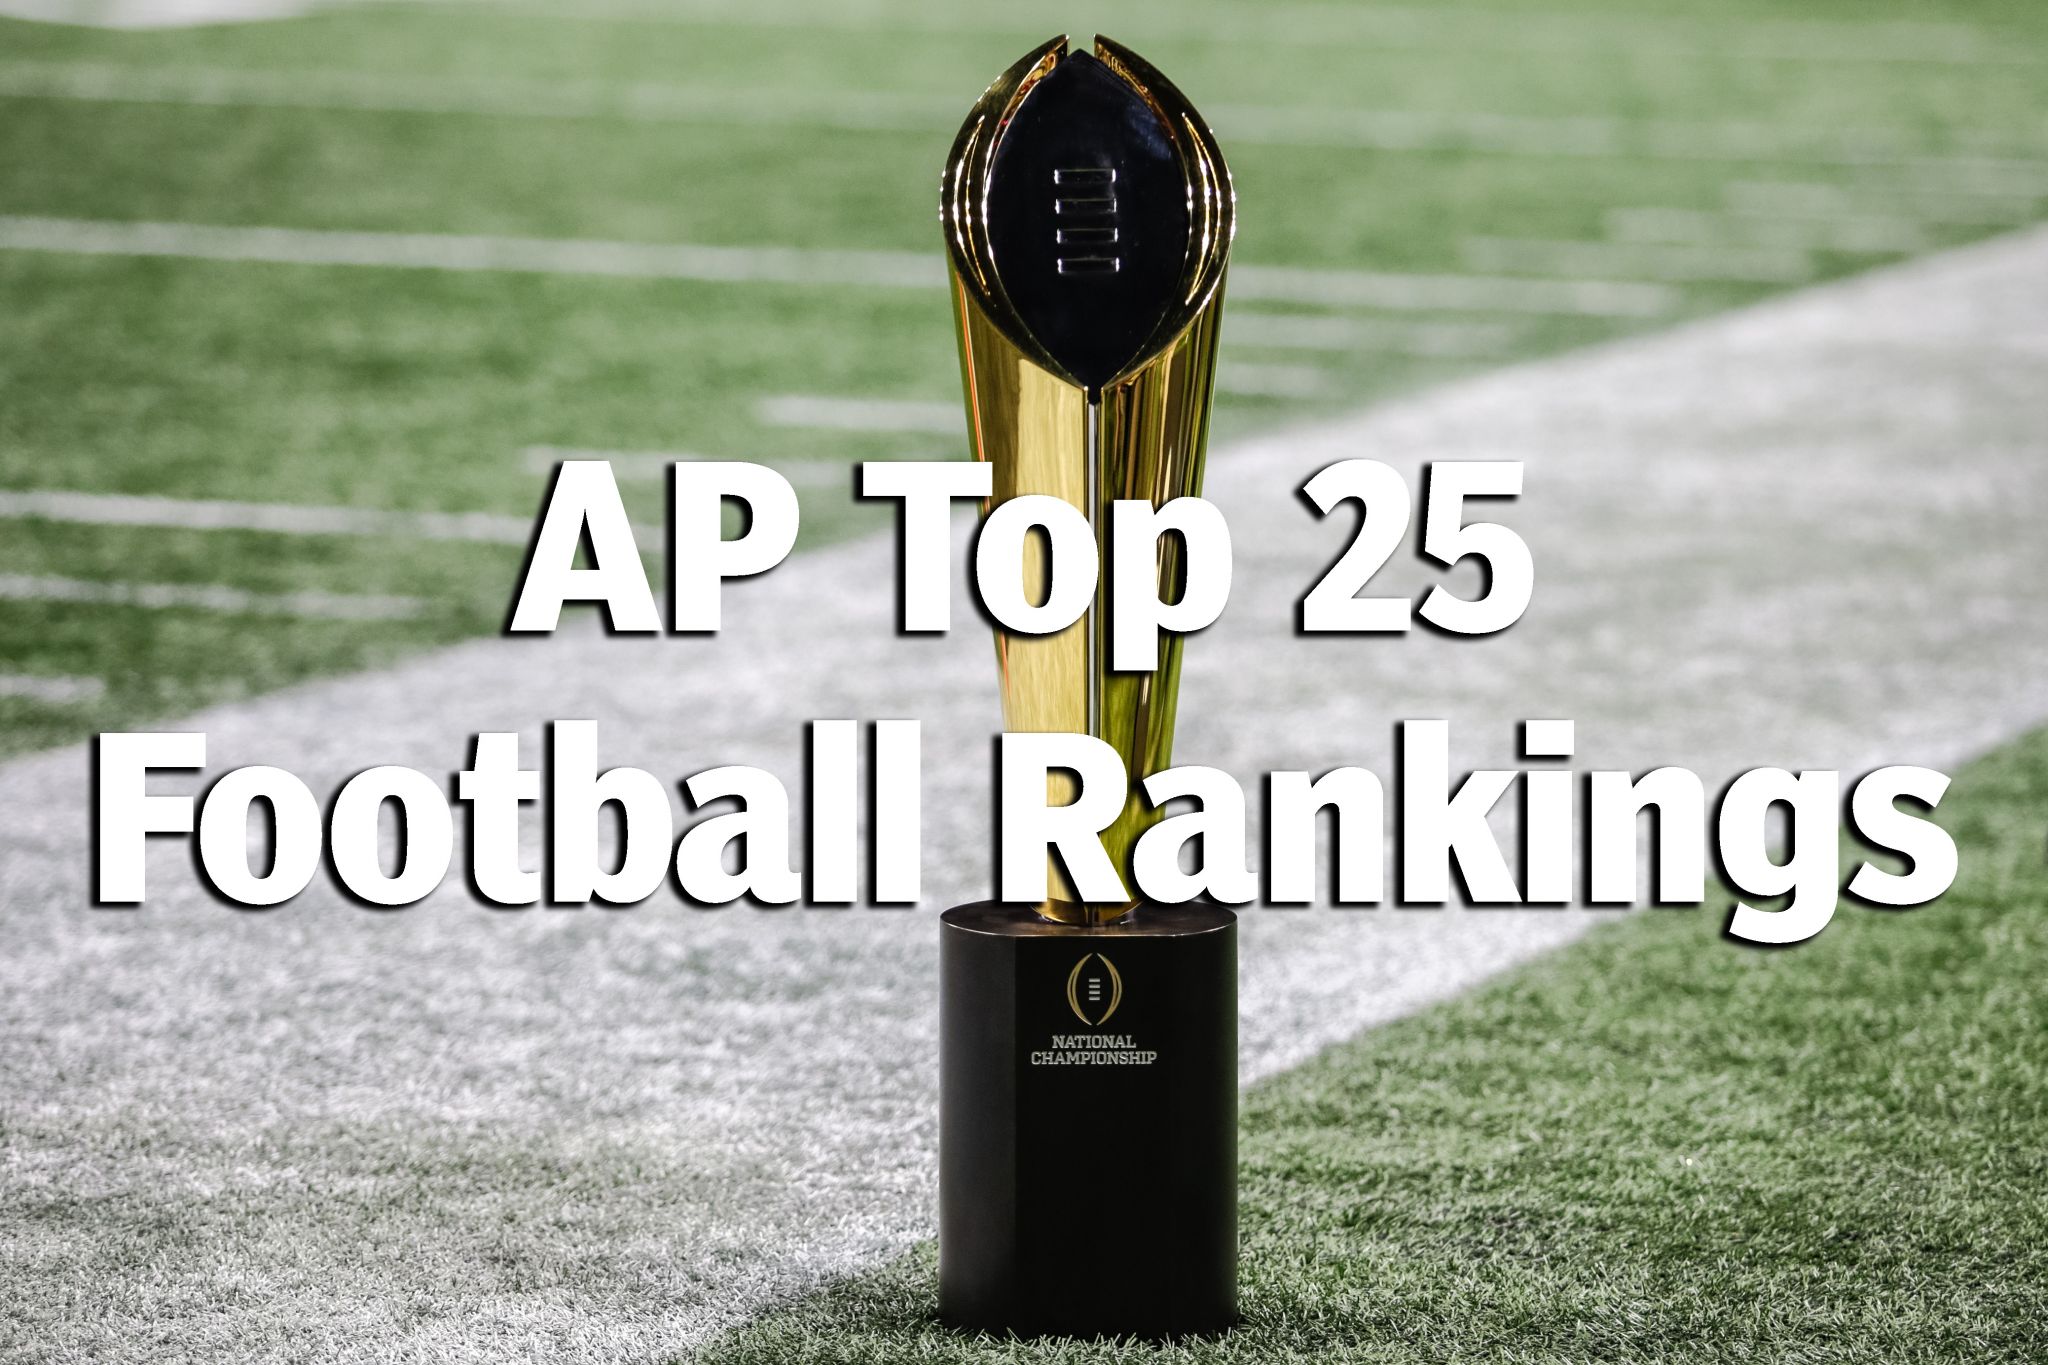 AP Top 25 NCAA football rankings for 2018